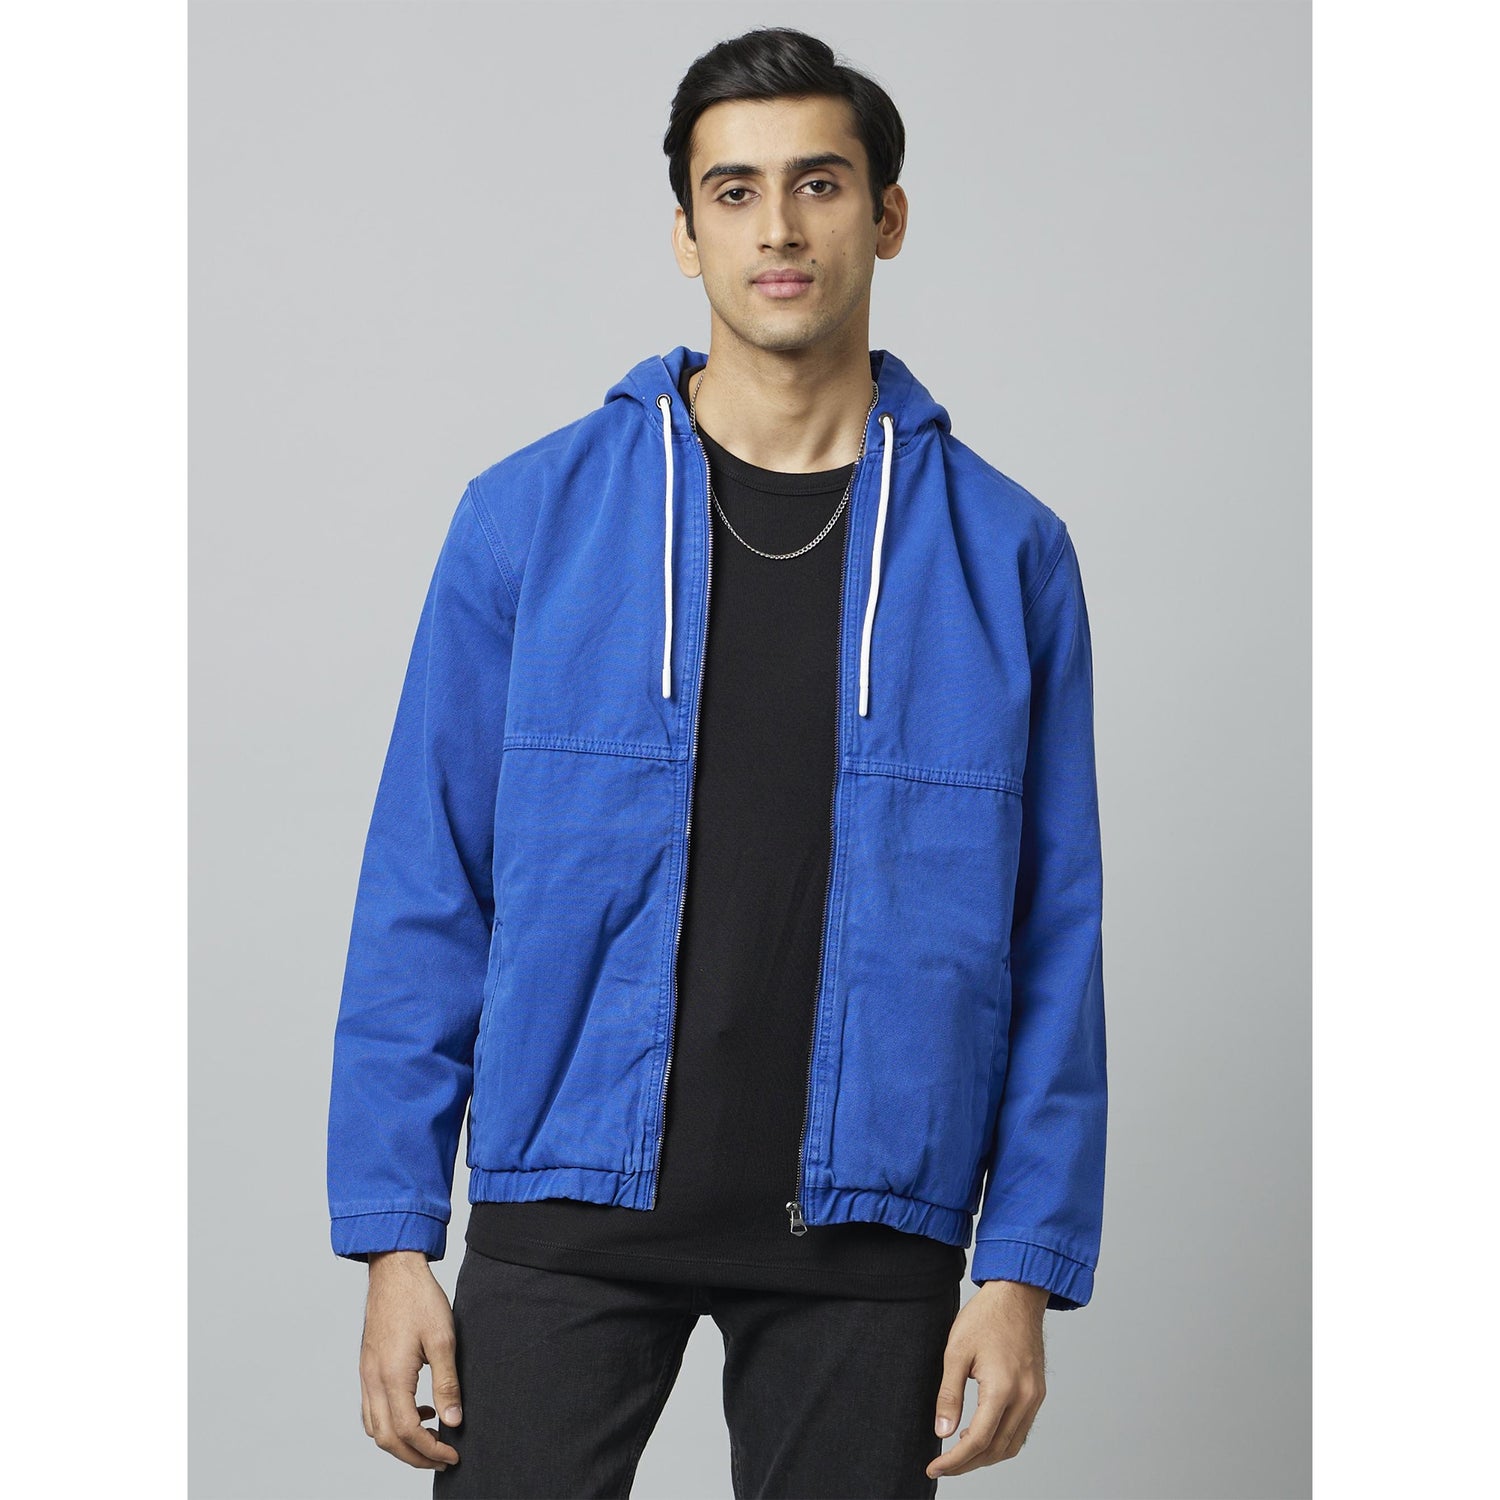 Blue Solid Long Sleeve Fashion Jackets (DUHOOD)